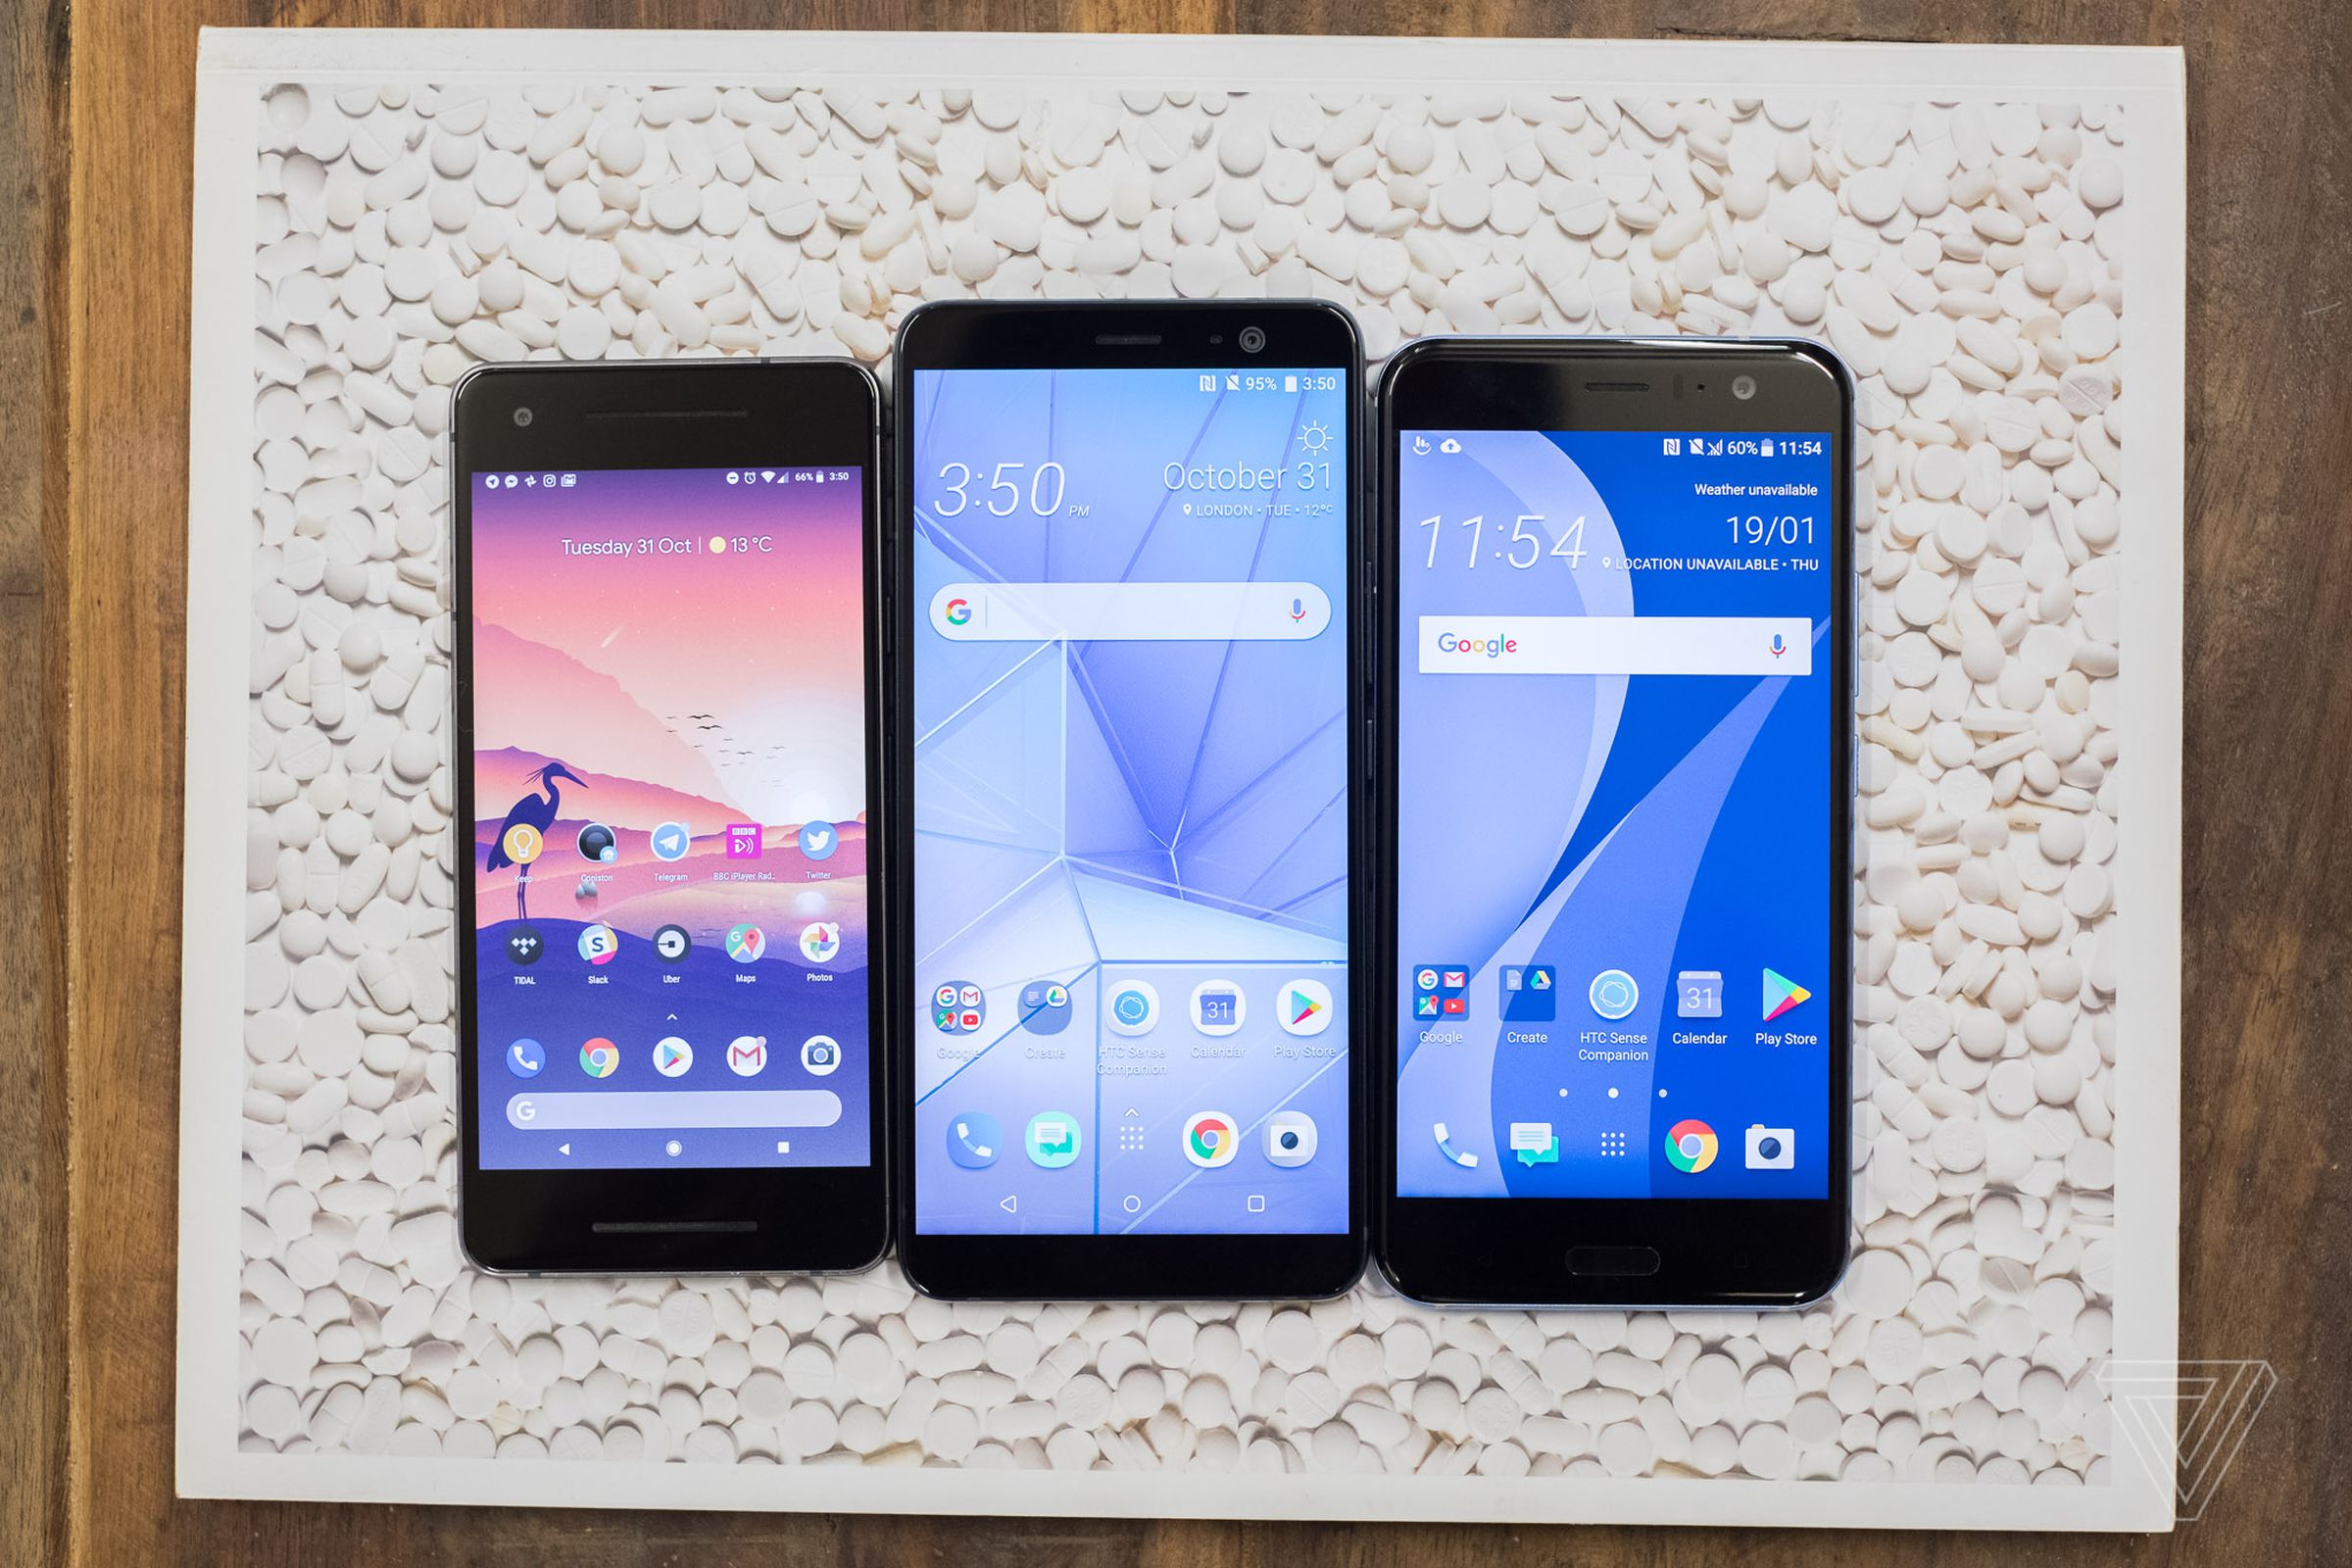 Google Pixel 2 next to HTC U11 Plus and U11